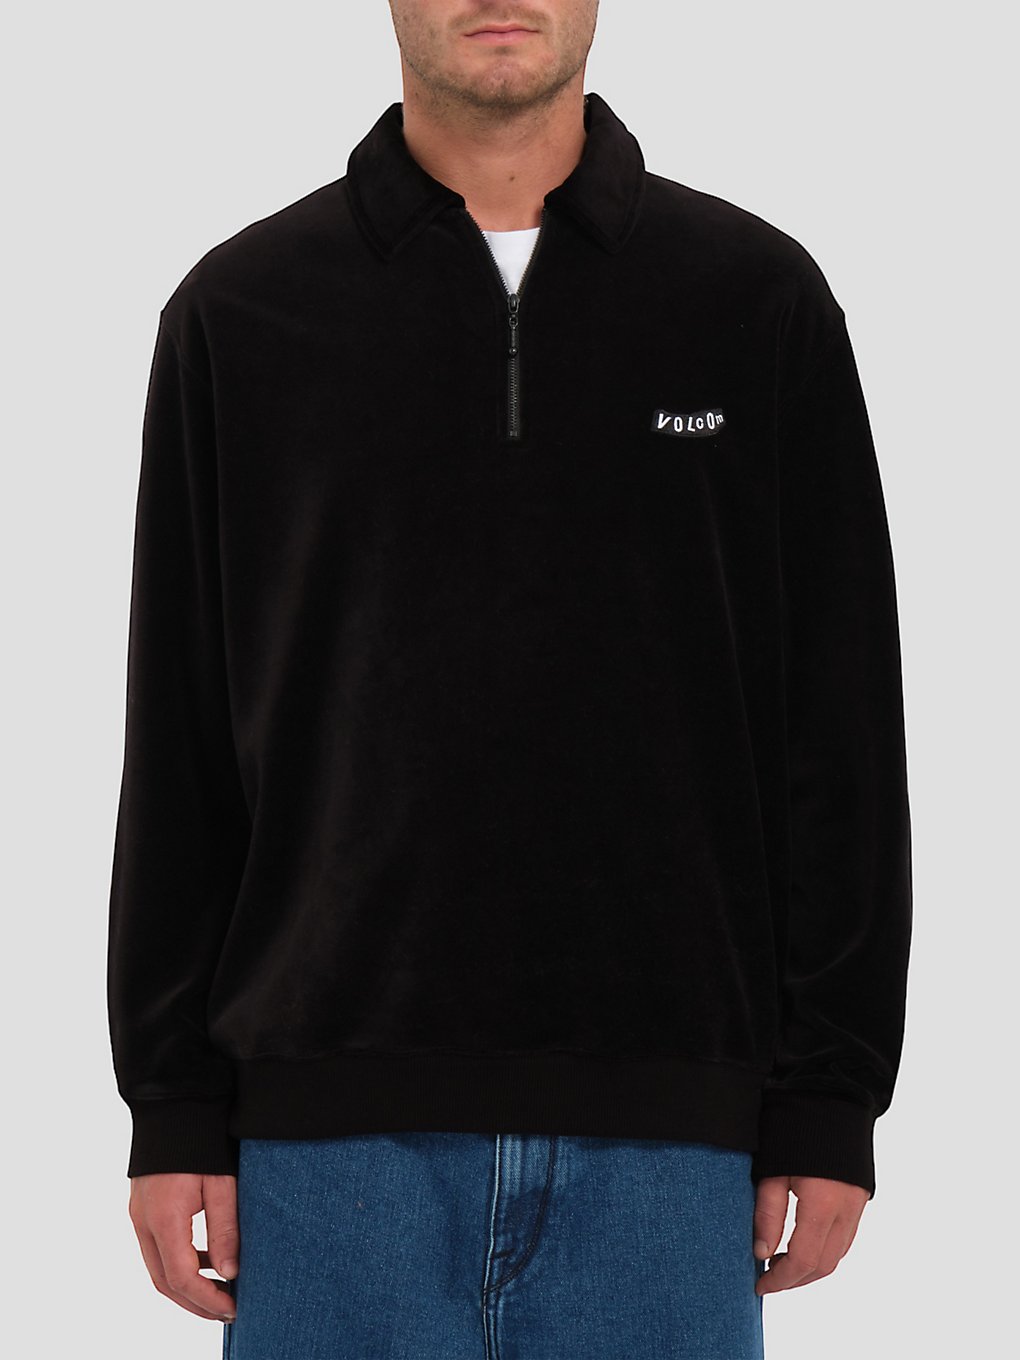 Volcom Nevermine Crew Sweater black kaufen